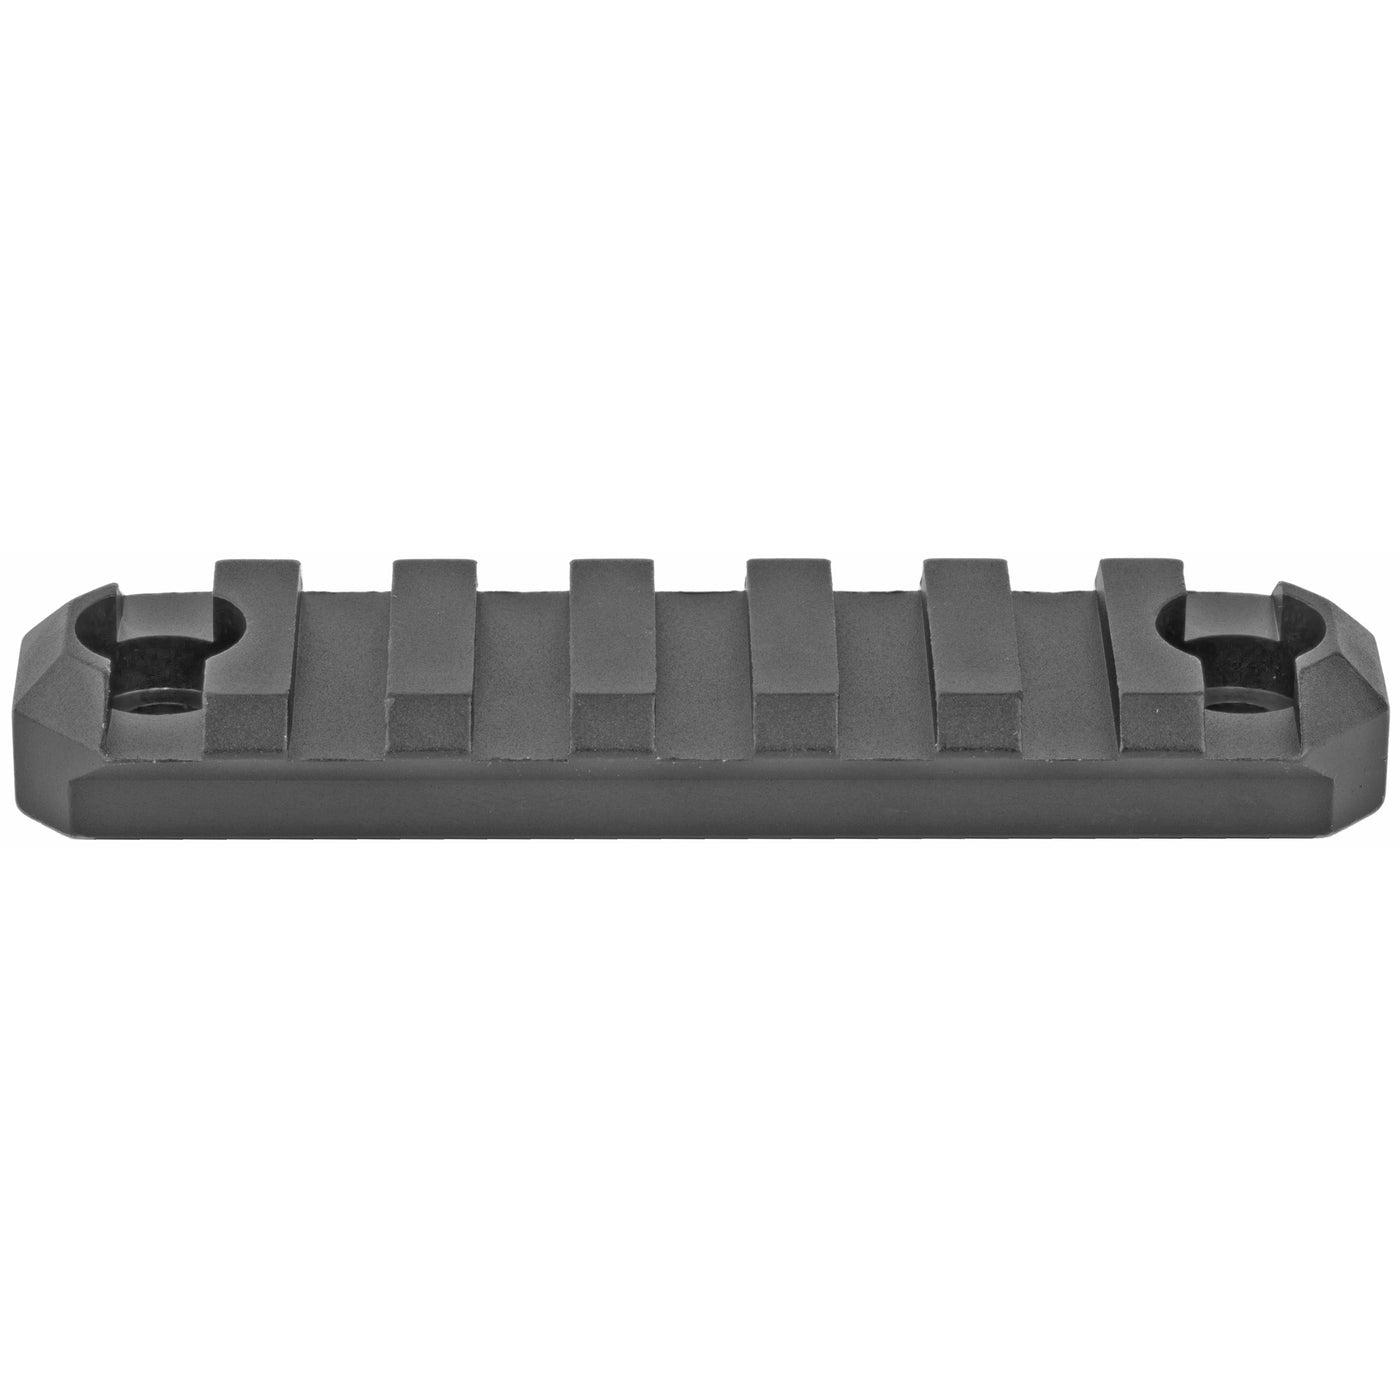 Grovtec Rail Section M-lok - 3" 7 Slot Aluminum Black